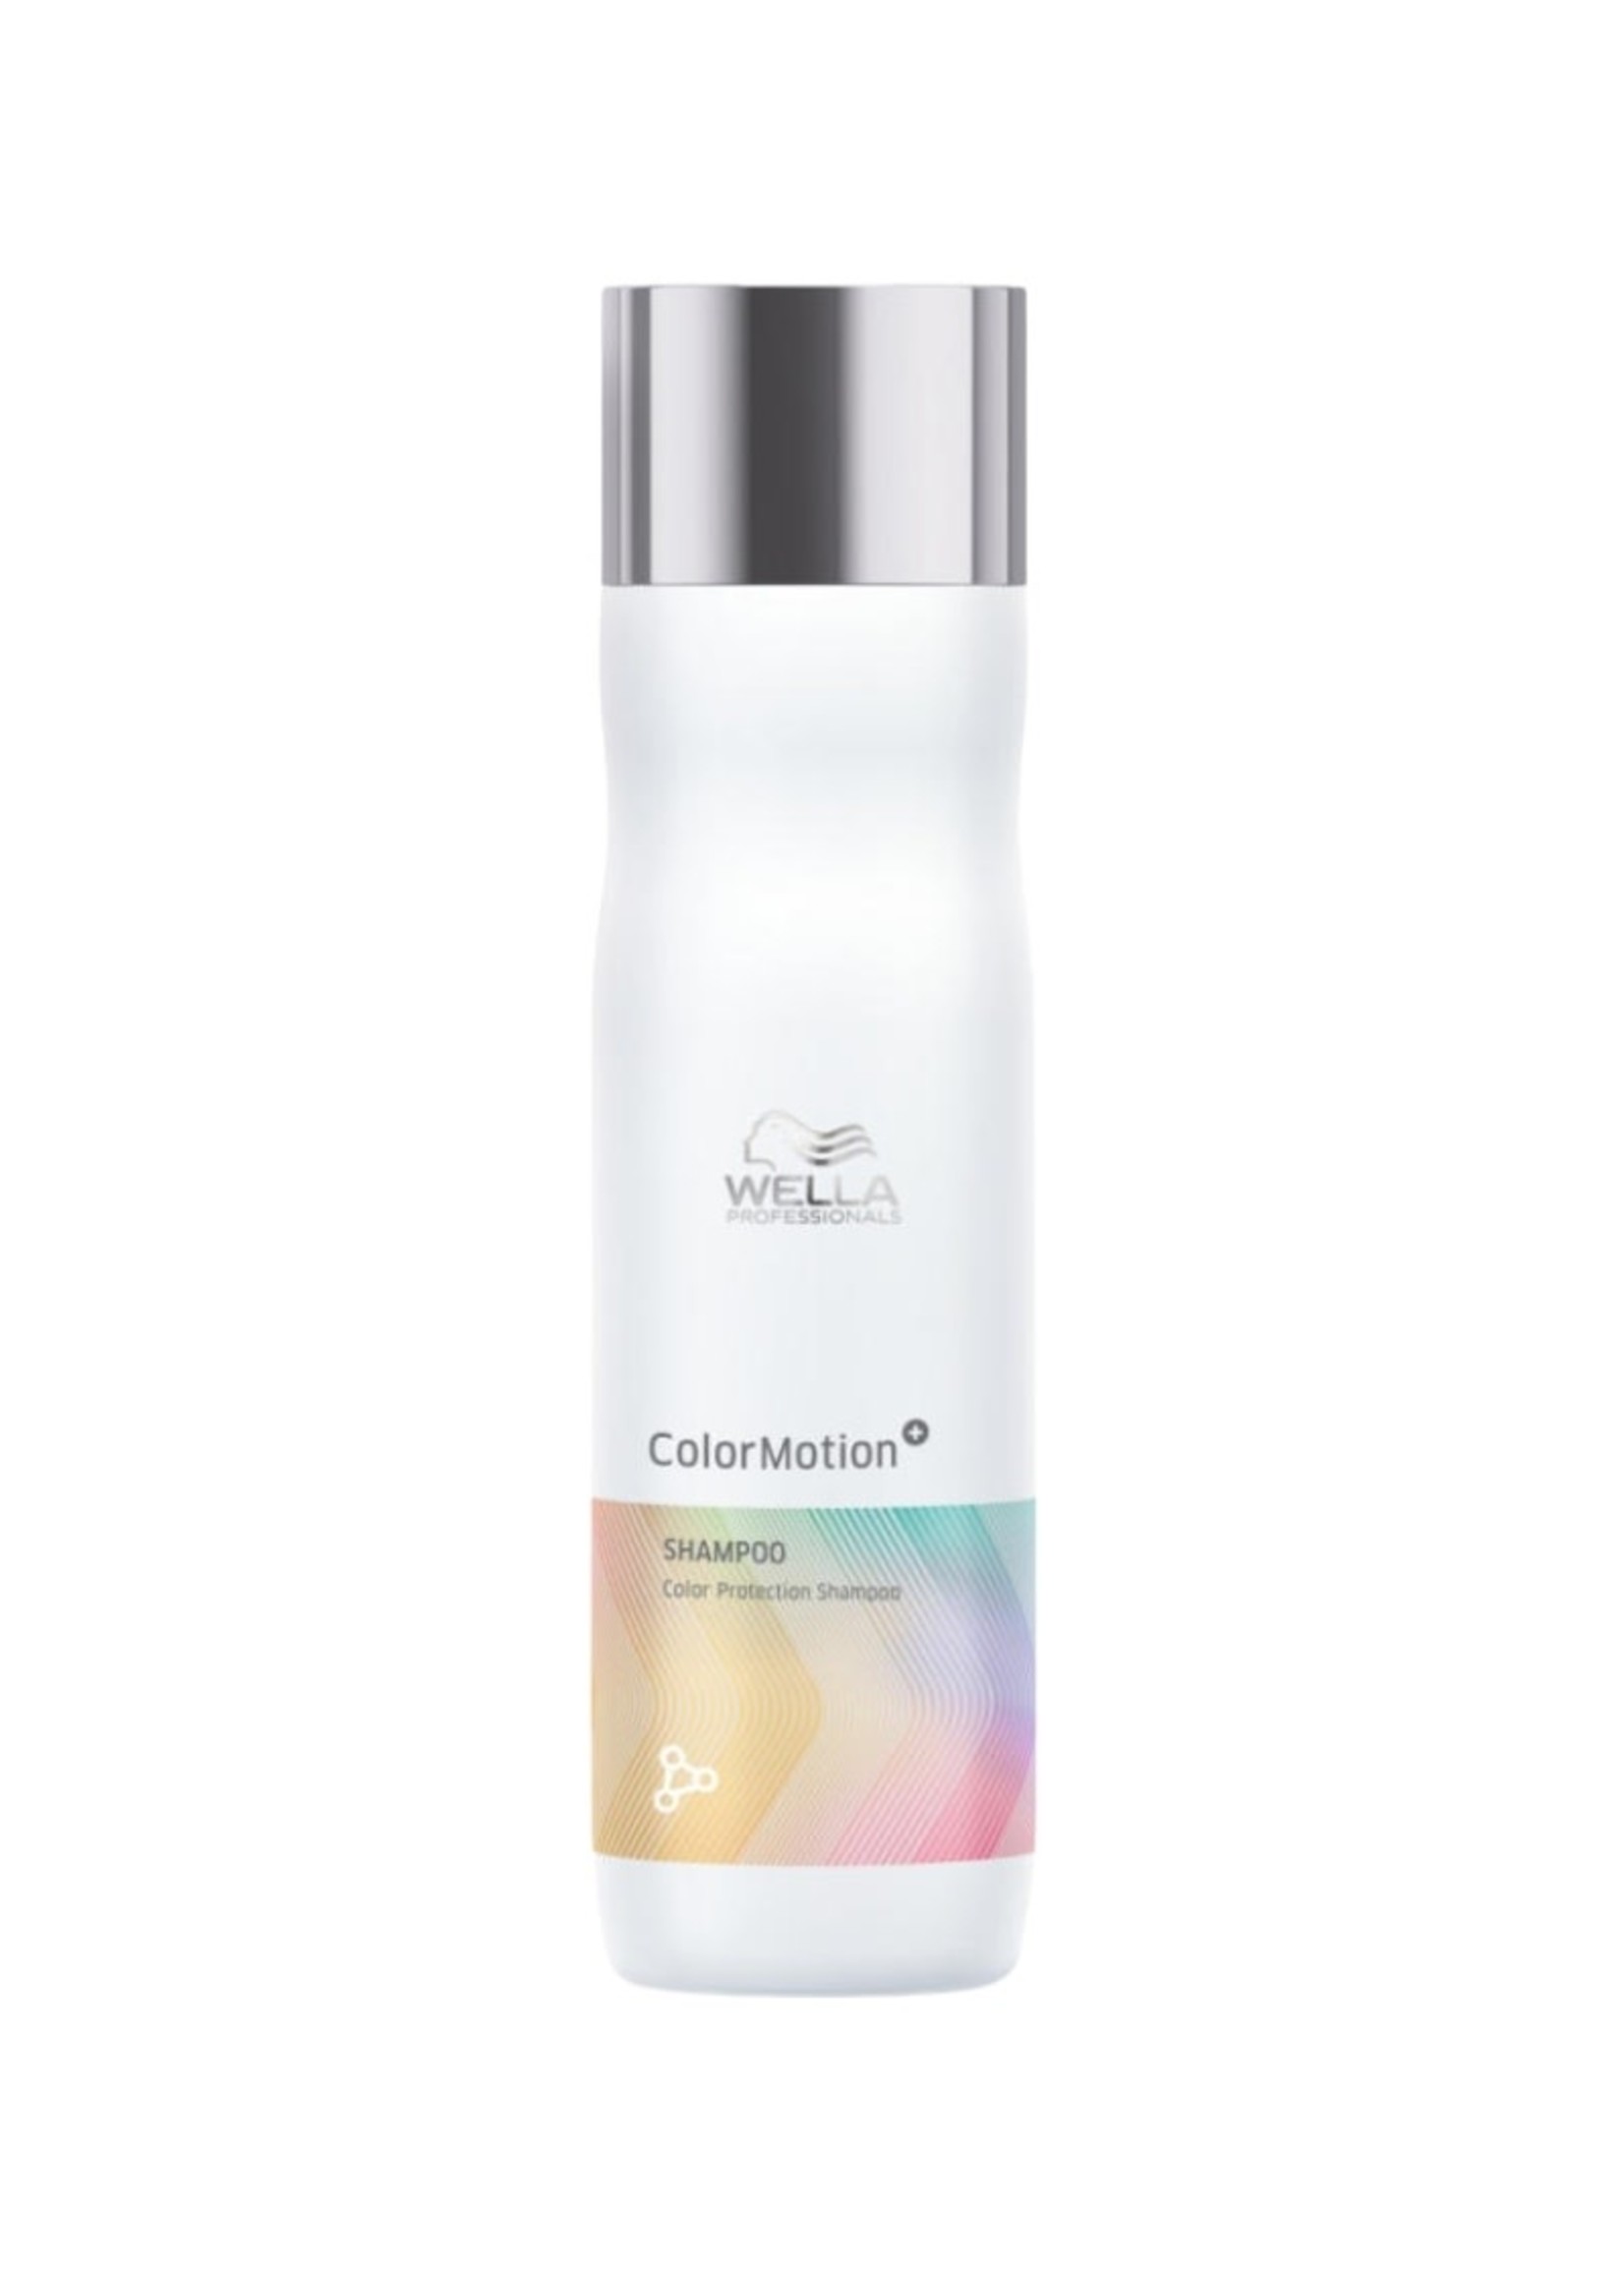 Wella Wella ColorMotion+ Color Protection Shampoo 250ml